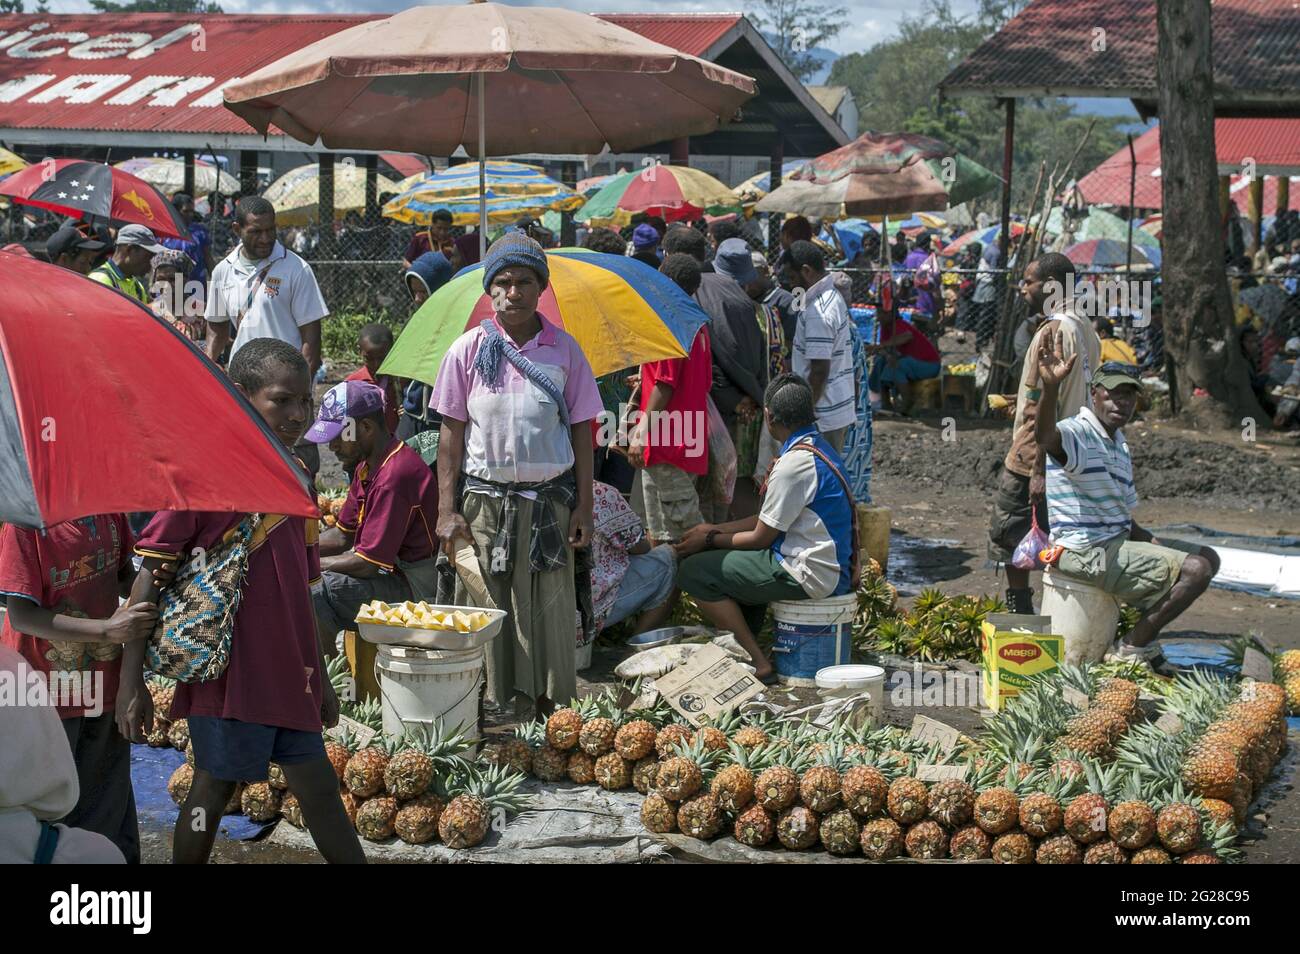 Papua New Guinea; Goroka; City marketplace. A city market full of people. Ein Stadtmarkt voller Menschen. Un mercado de la ciudad lleno de gente. 市場。 Stock Photo